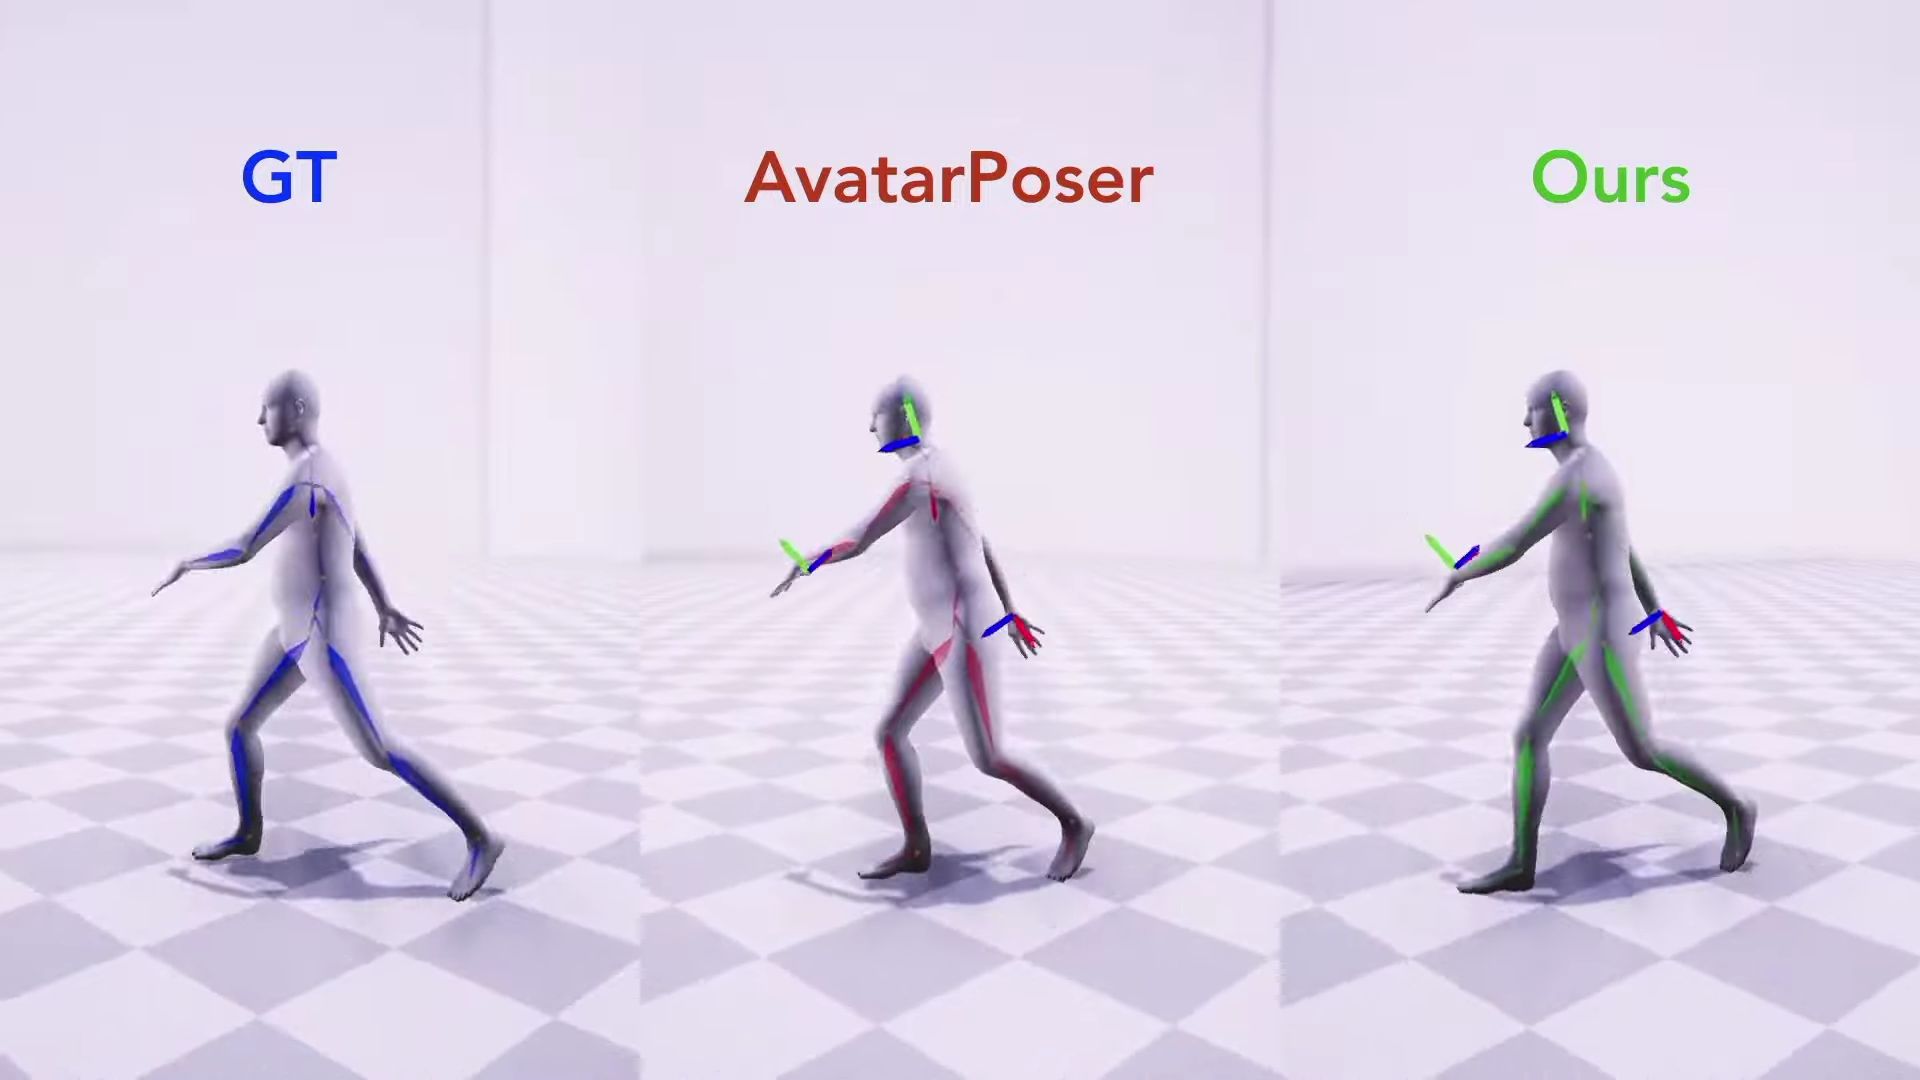 Will this AI system solve Meta’s full-body avatar problem?